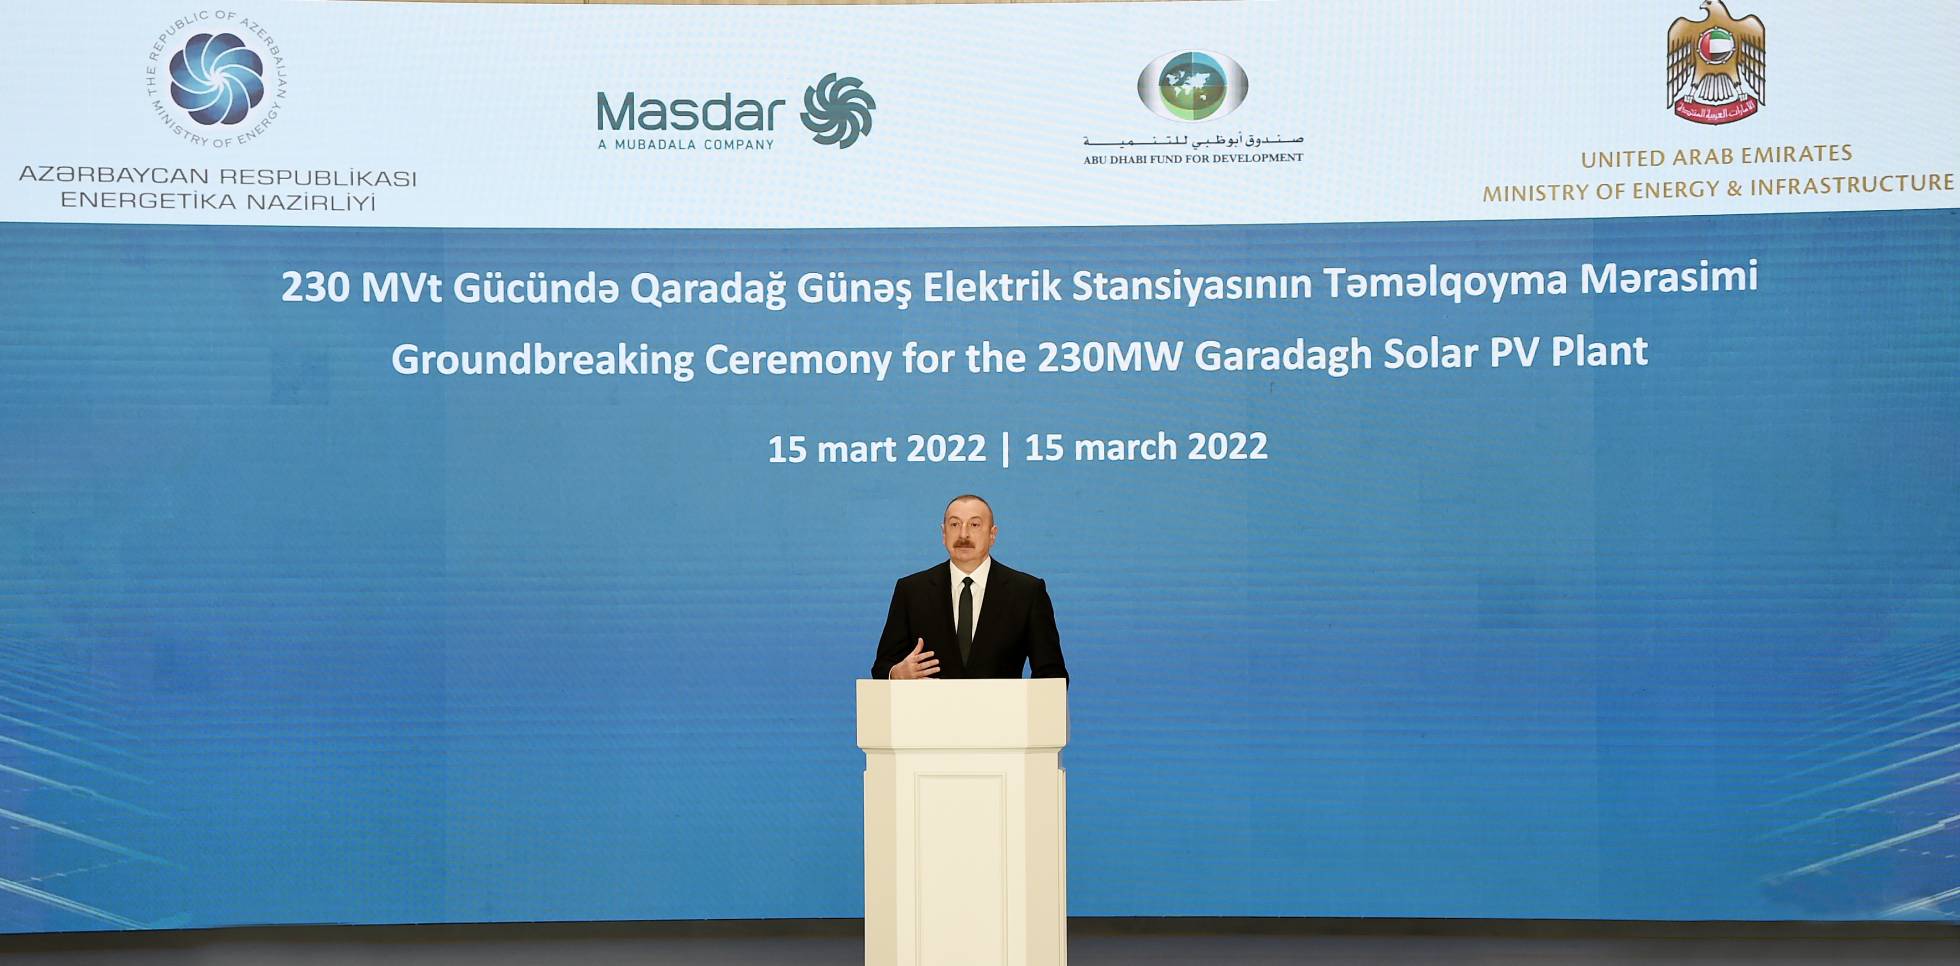 Groundbreaking ceremony of the 230 MW Garadagh Solar Power Plant